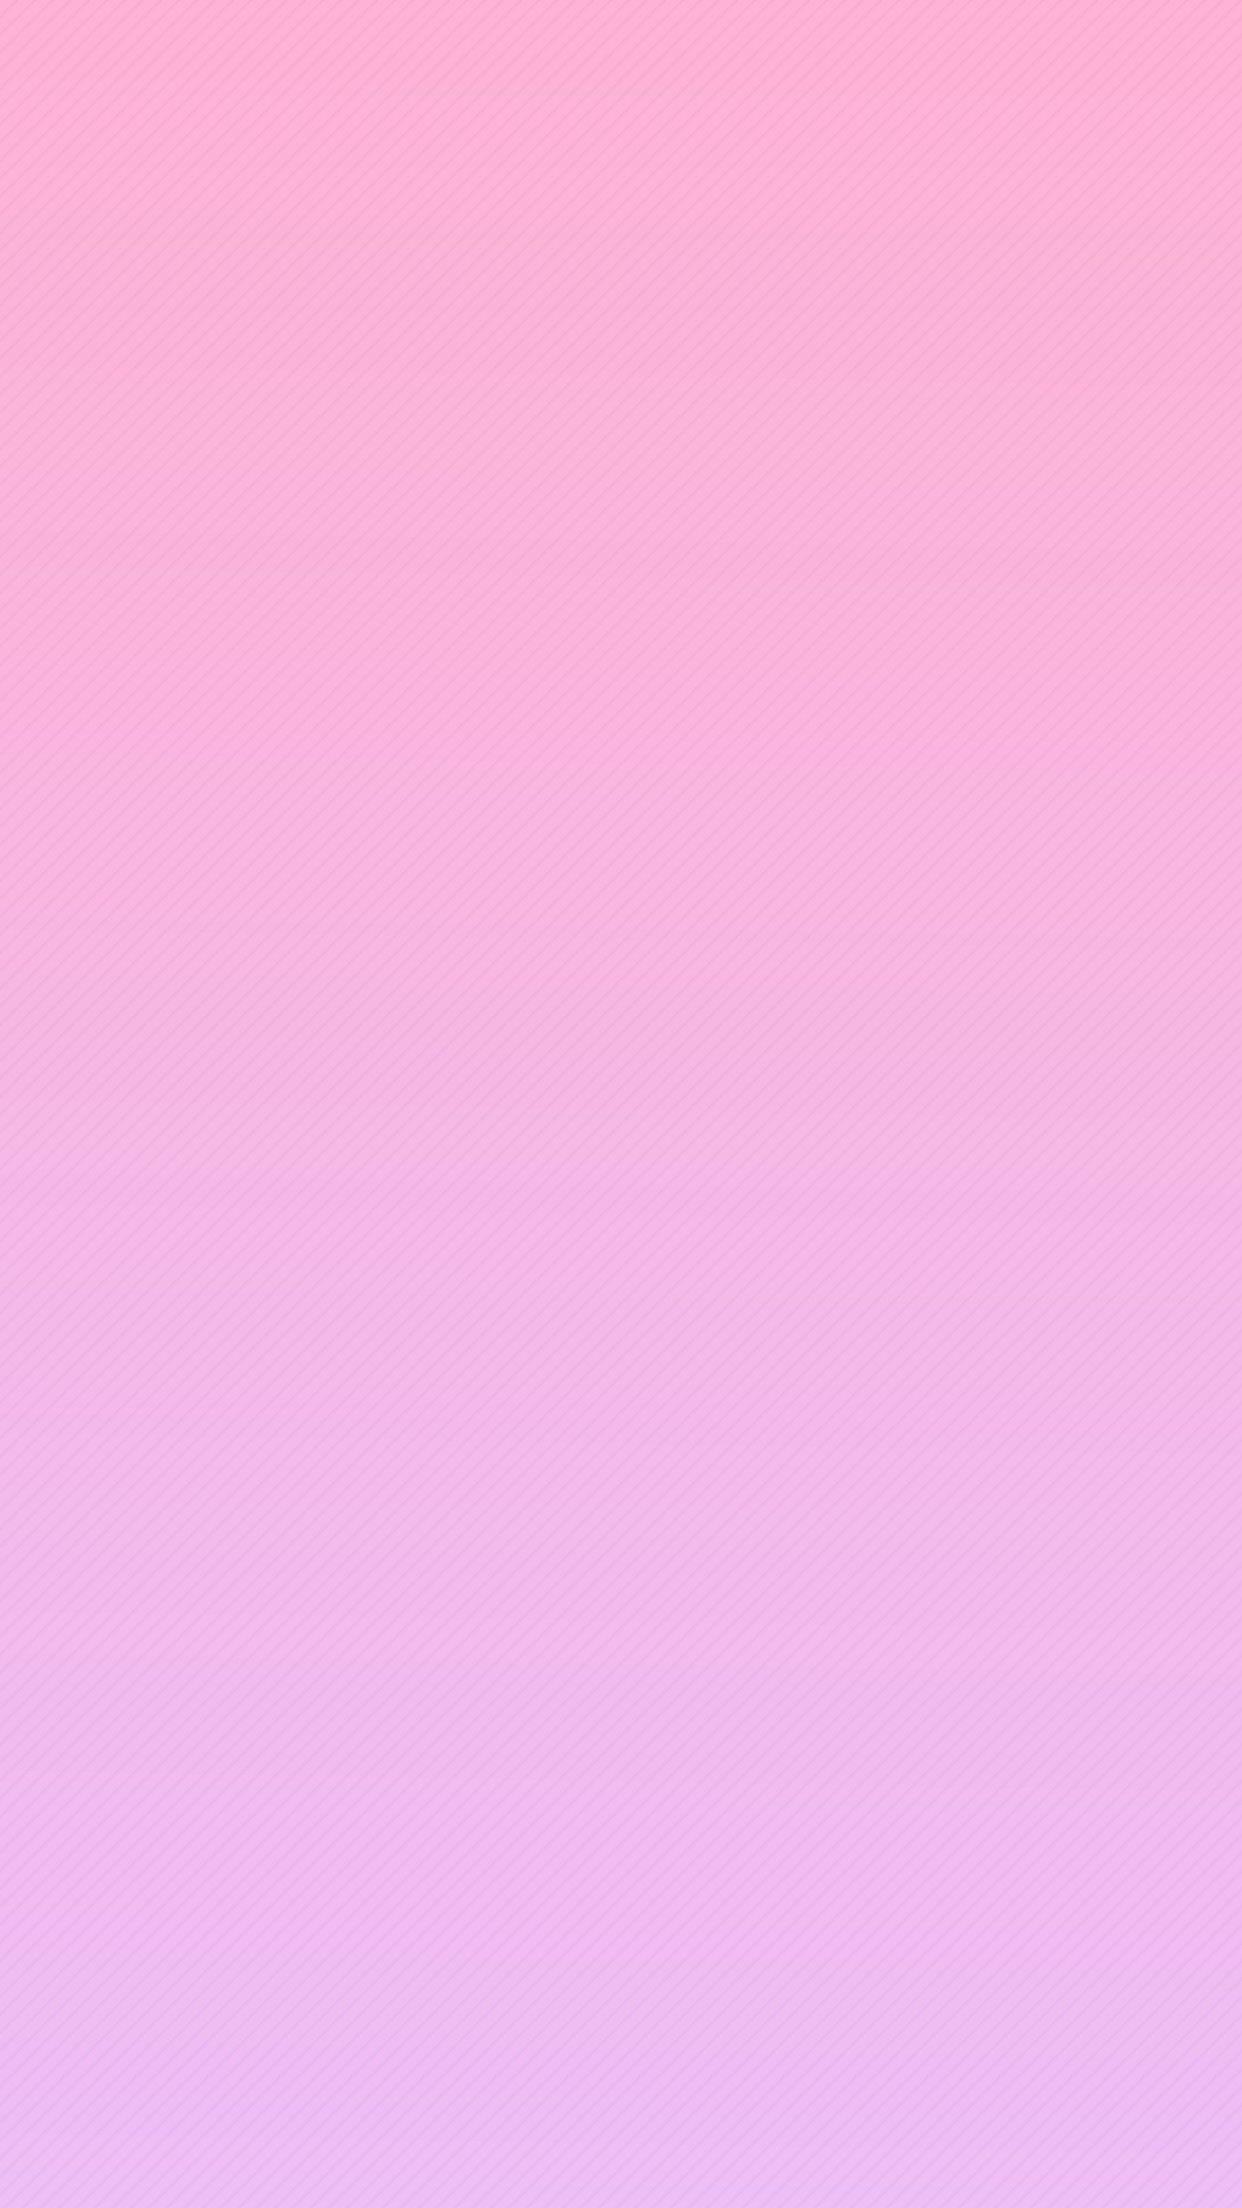 light pink gradient background  pink radial gradient effect wallpaper  Stock Illustration  Adobe Stock